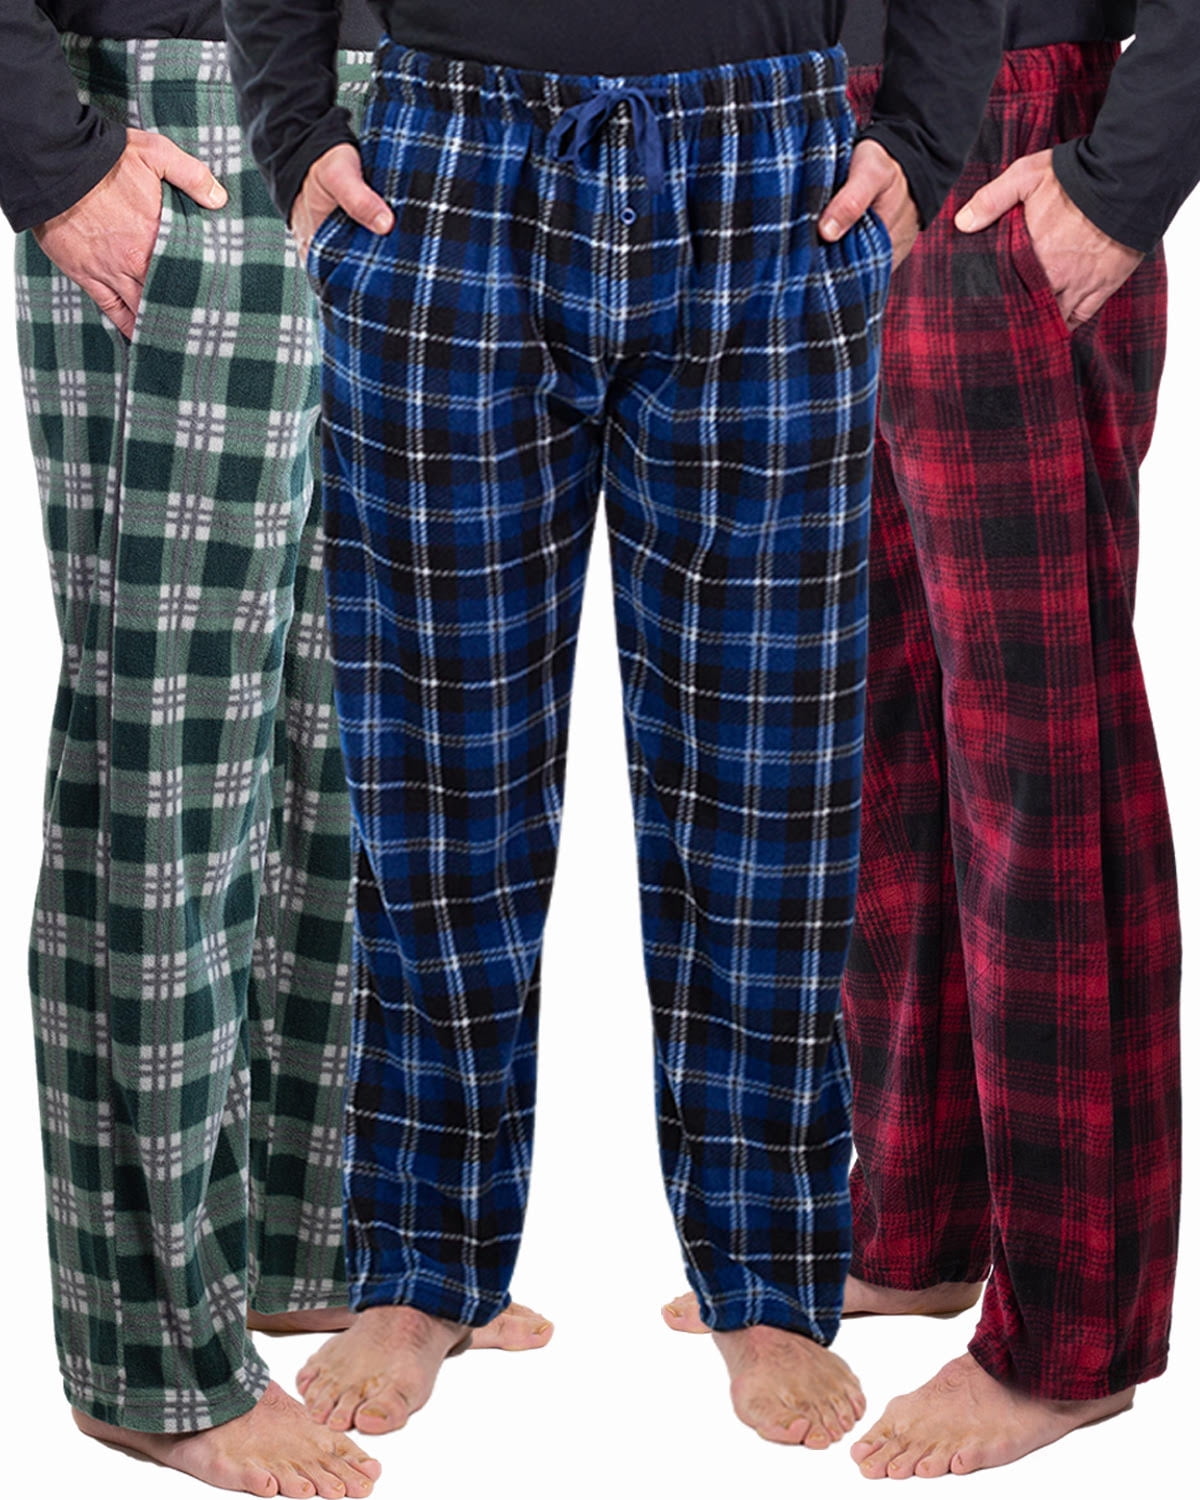 XBOX Lounge Pants Mens Black Game Console Pyjamas Trouser Bottoms Pjs